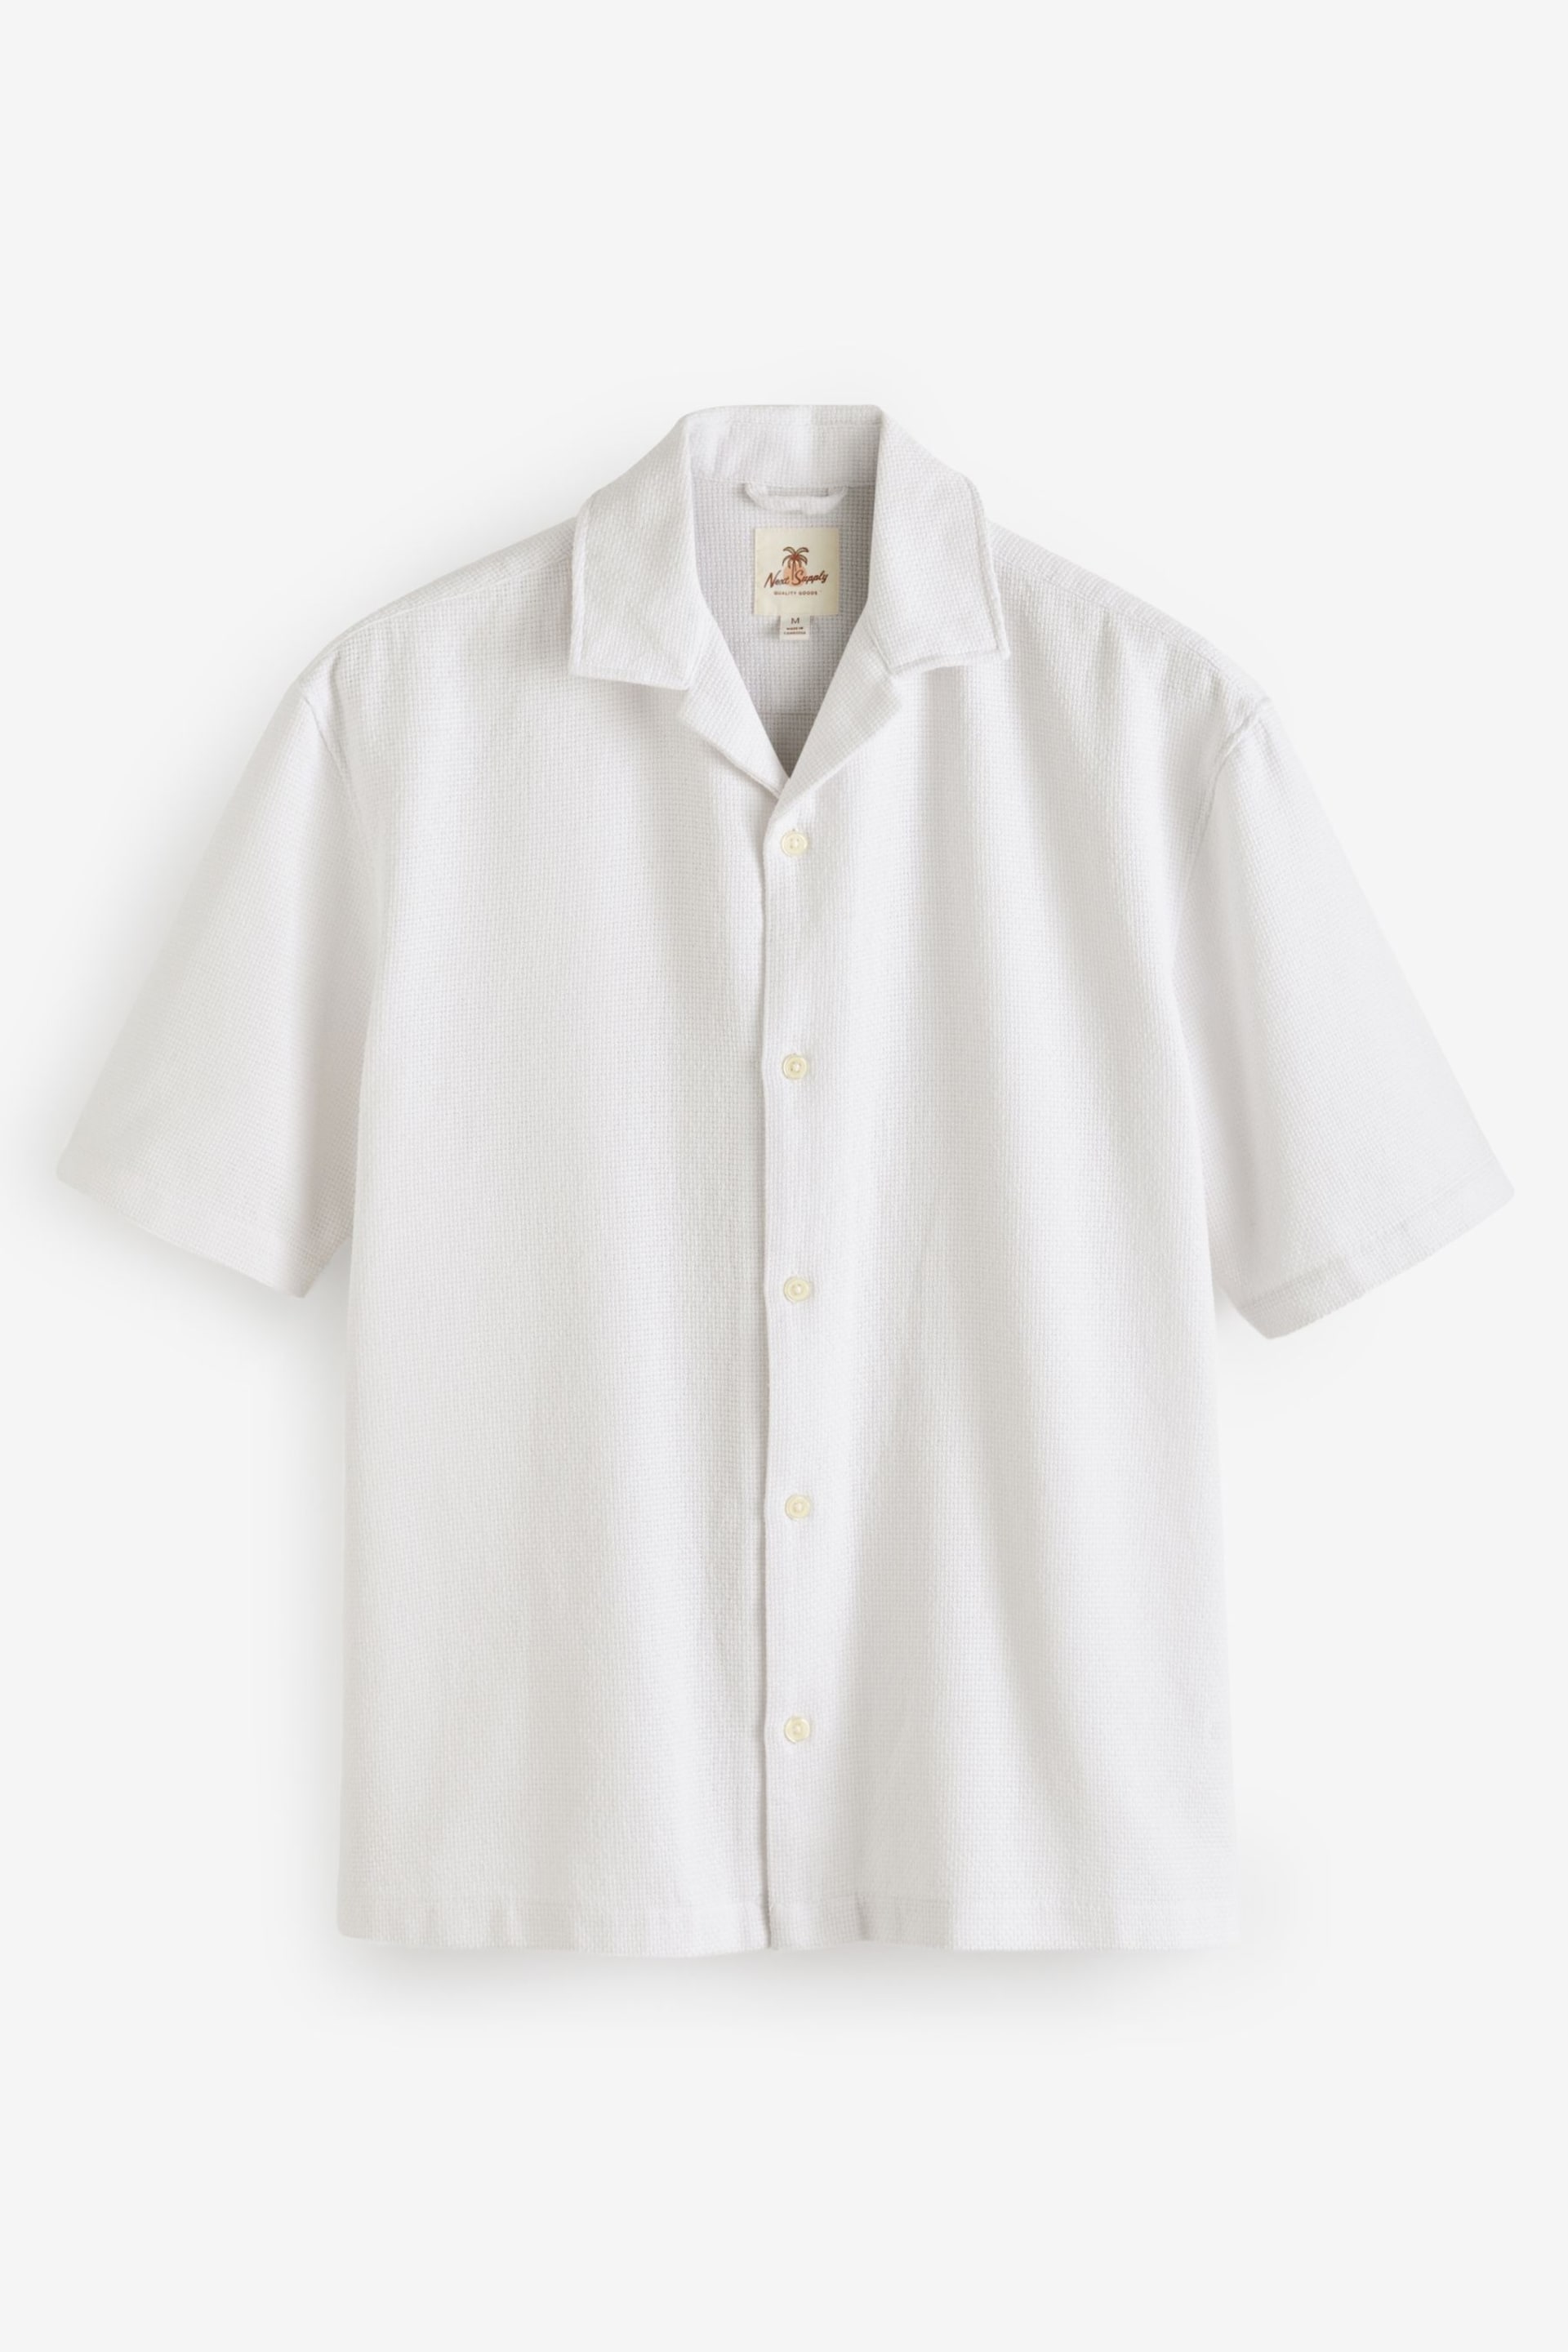 White Textured Short Sleeve Cuban Collar Shirt - Image 6 of 8